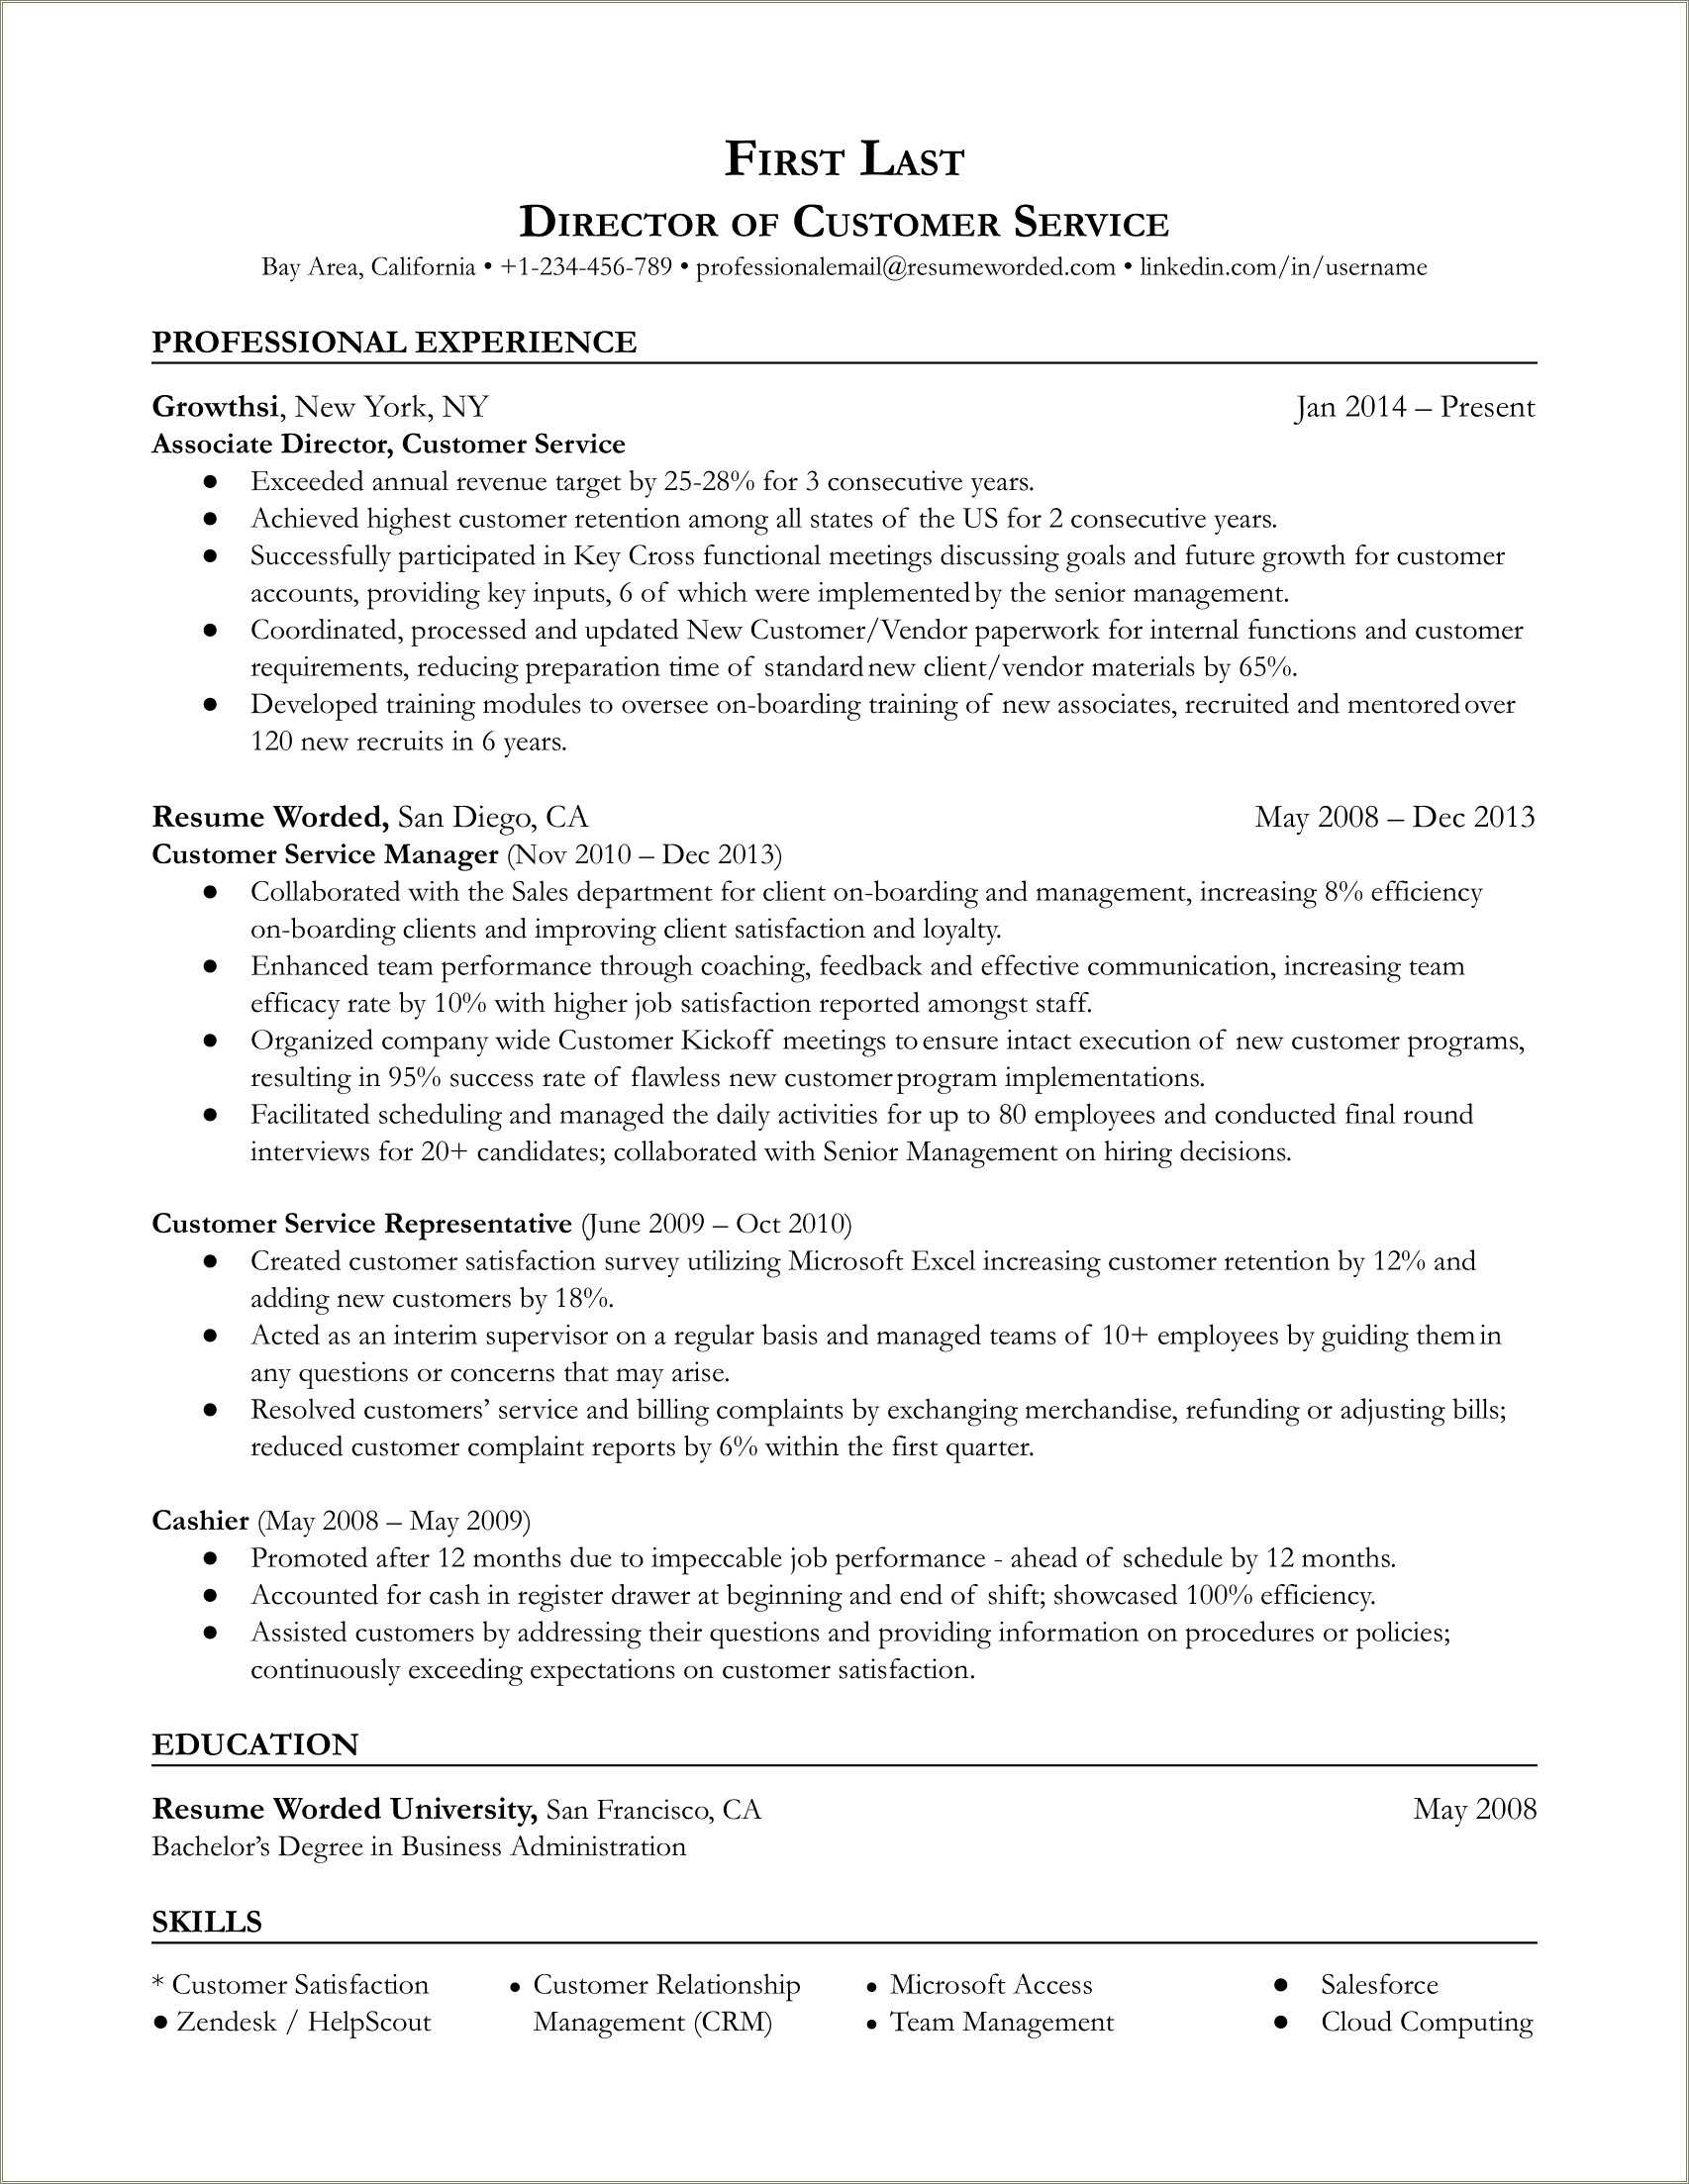 Customer Service Skills Section Of Resume